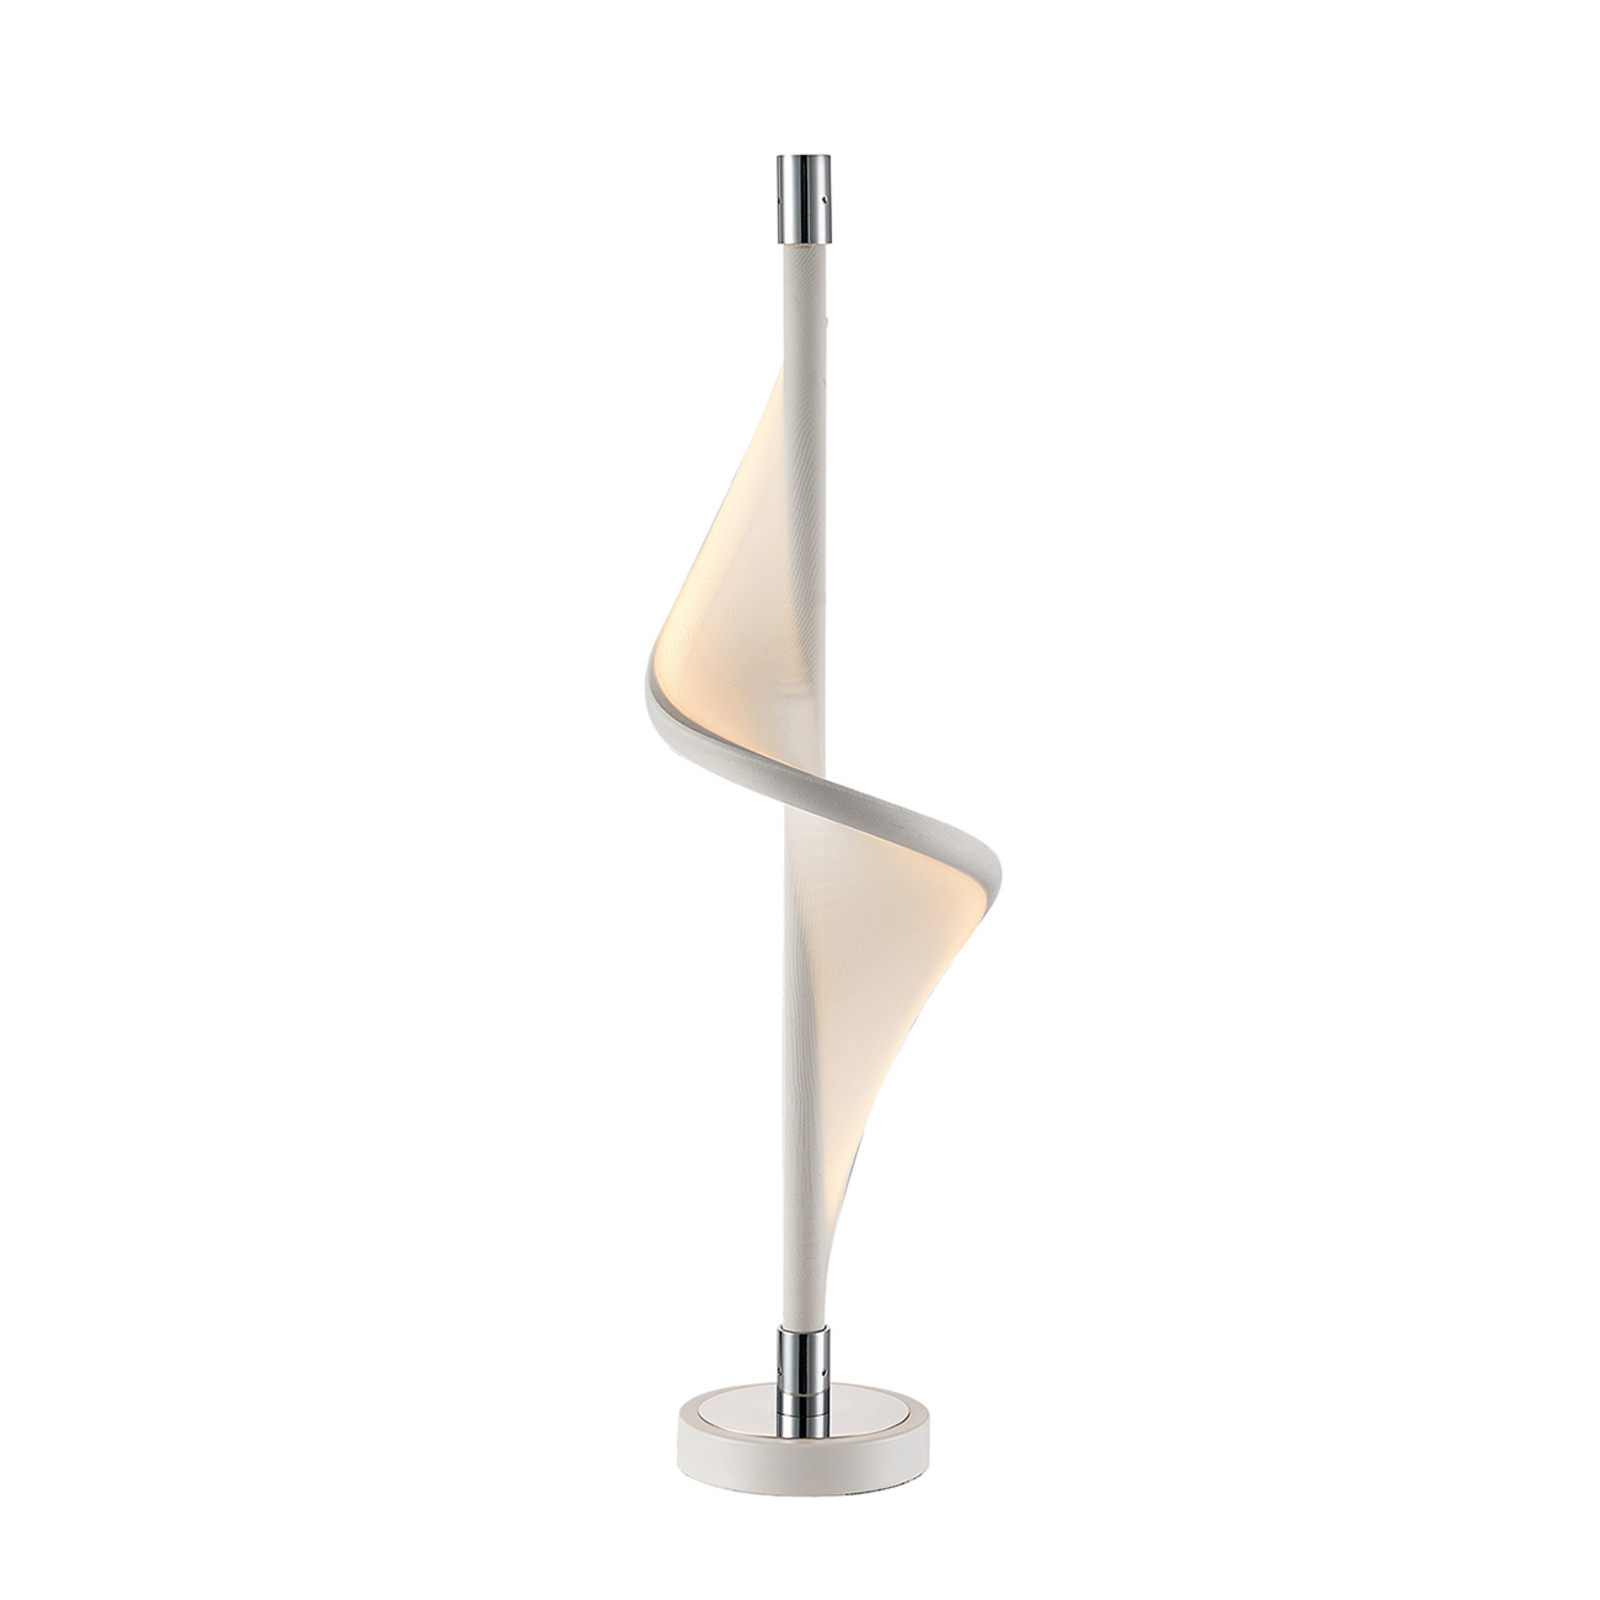 Lucande Edano lampa stołowa LED kręty kształt